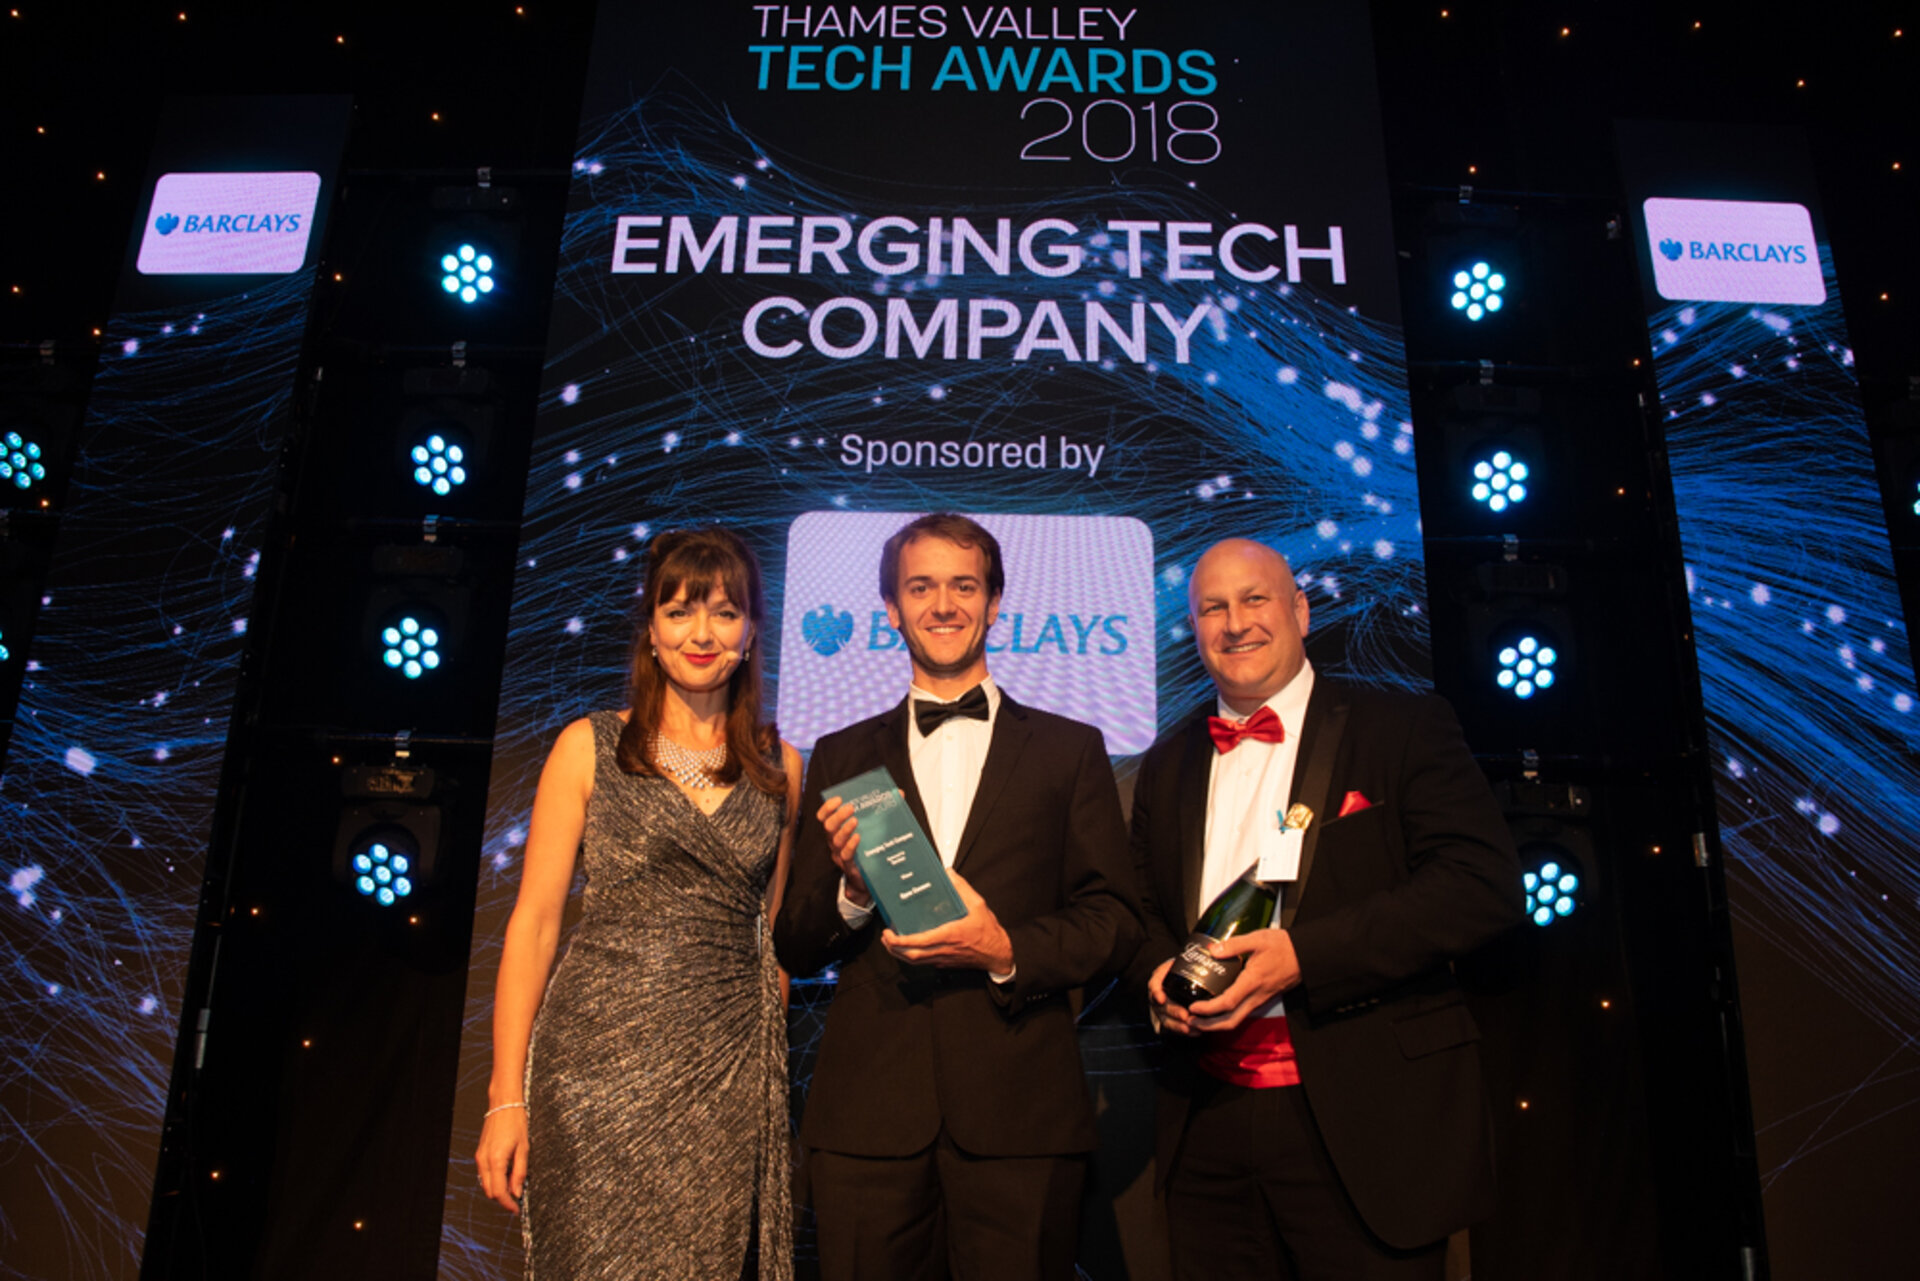 Thames Valley Tech Awards 2018 winner Open Cosmos